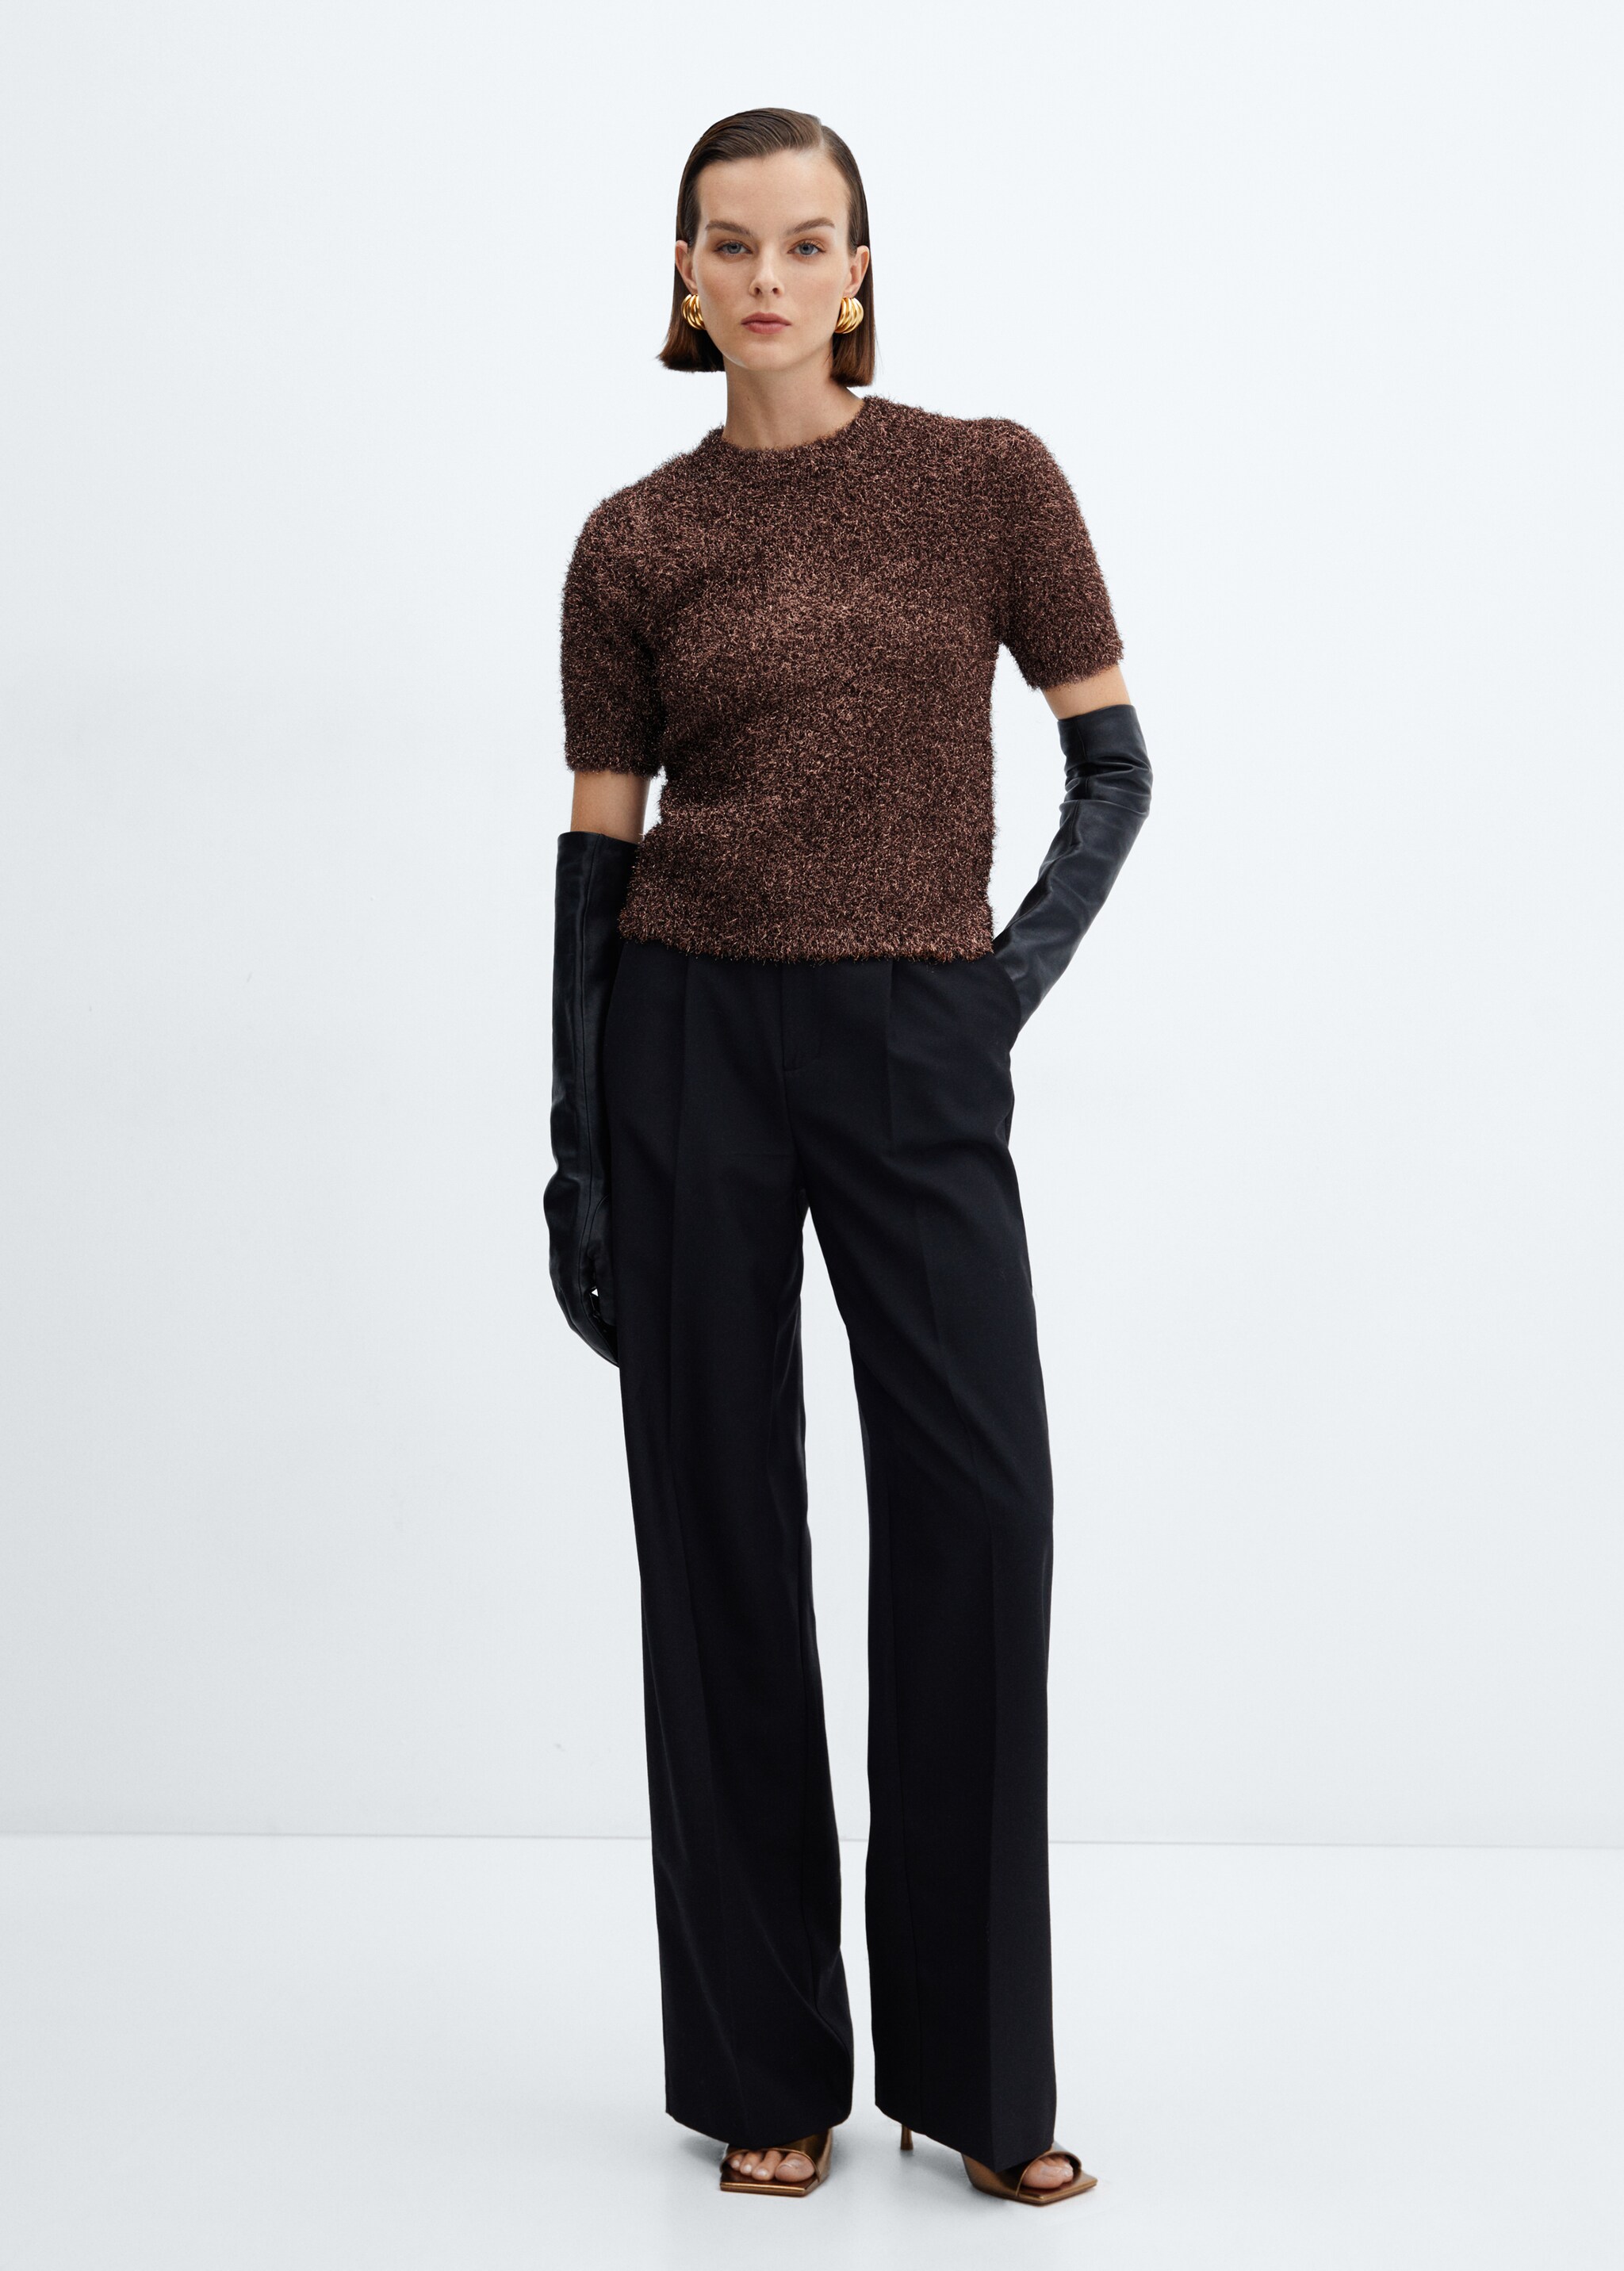 Short-sleeved lurex sweater - Plan general